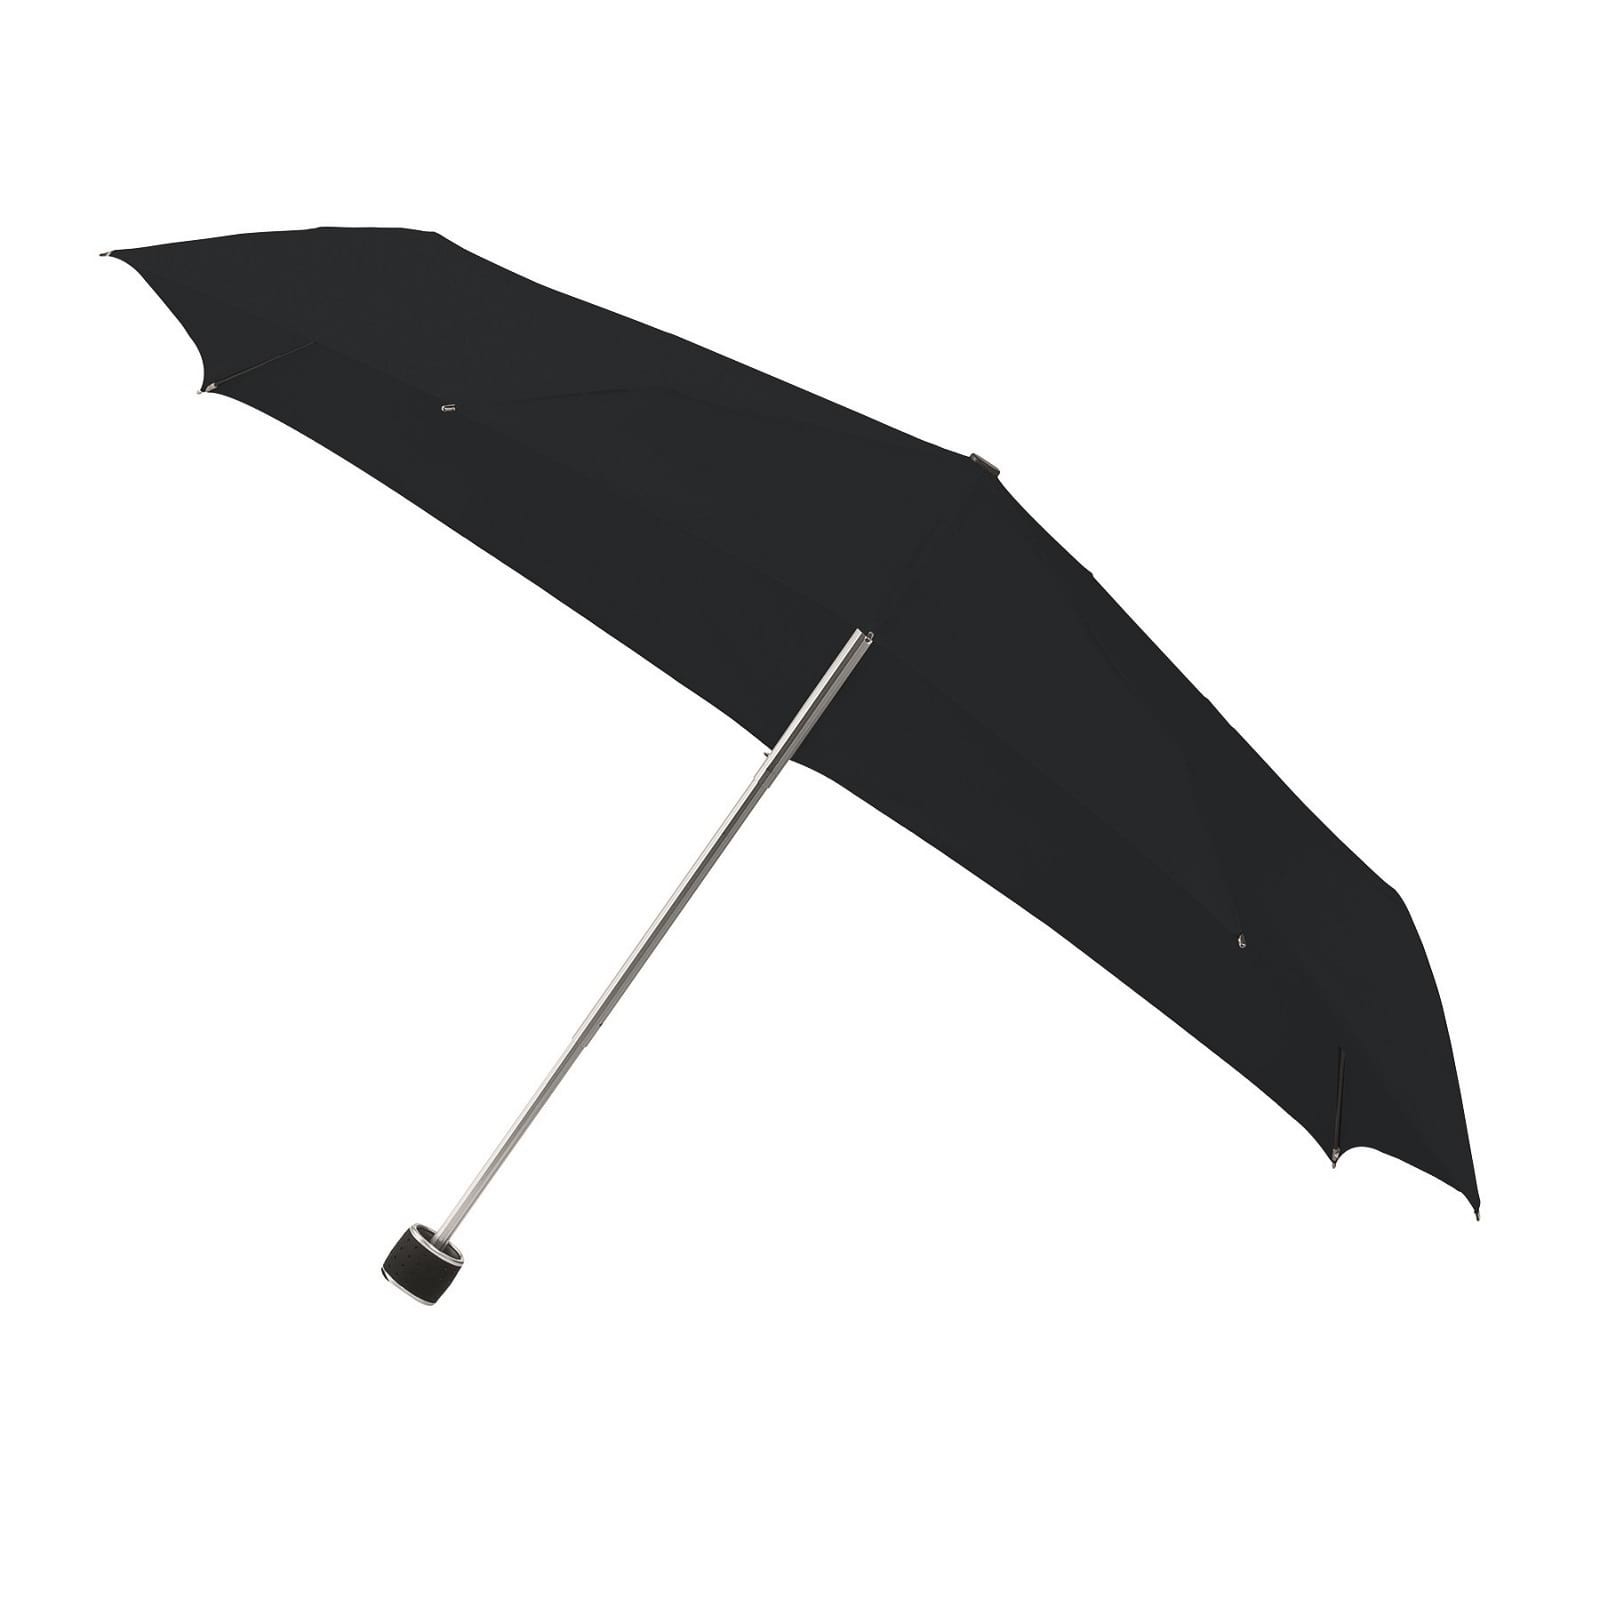 graven Verwant het is mooi Impliva STORMini Folding Storm Umbrella Black | Design Is This